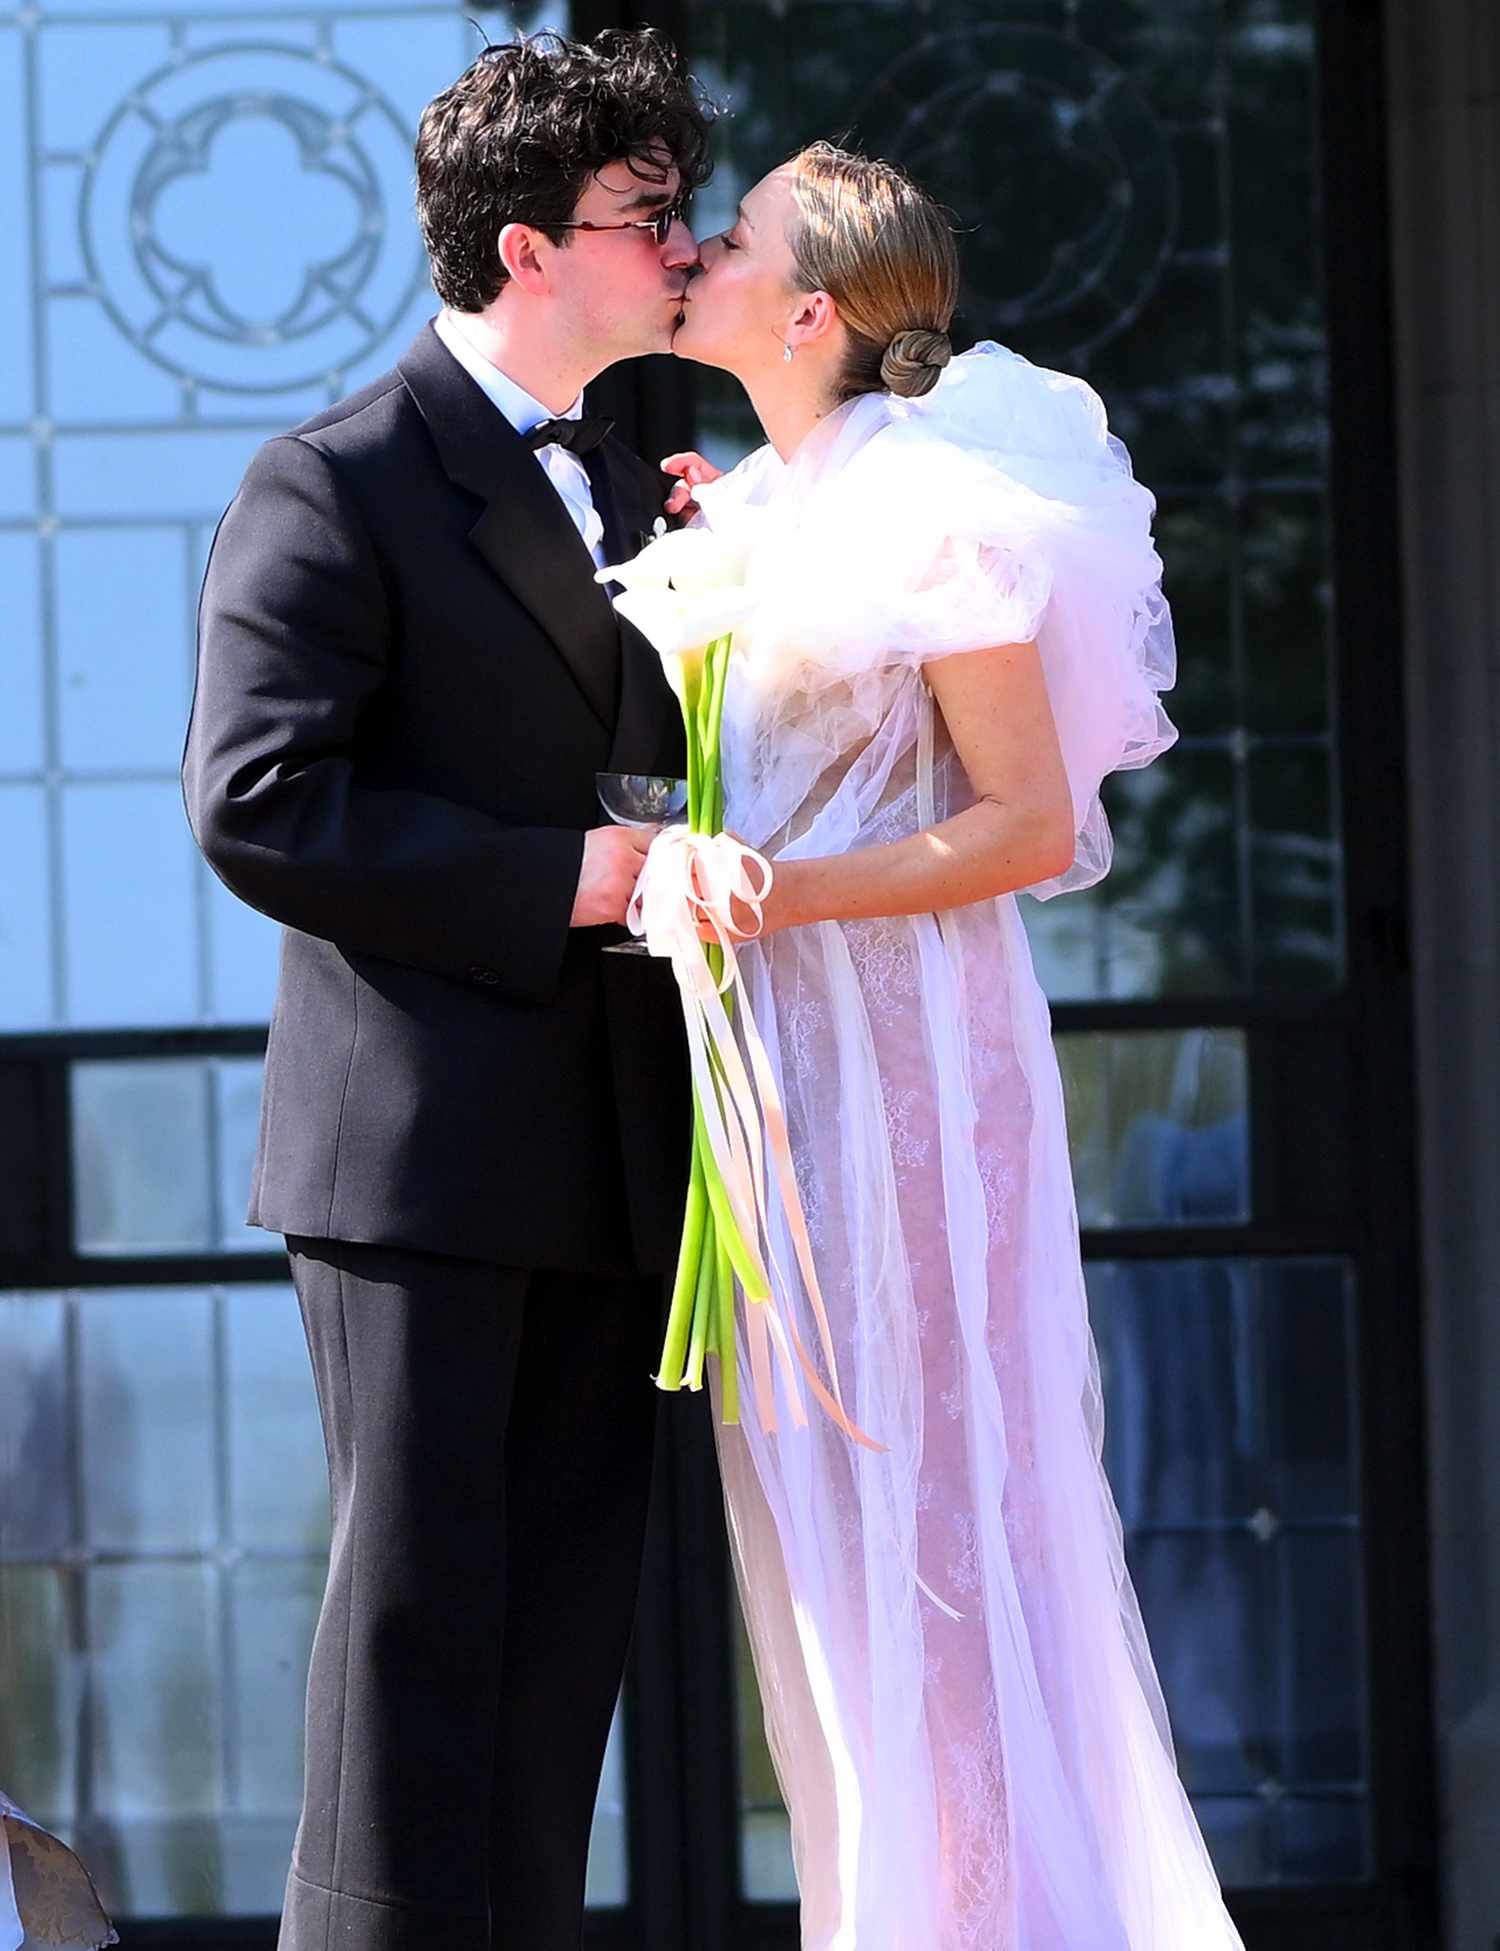 Chloë Sevigny Has Wedding 2 Years After Marrying Siniša Mackovic: Pics |  PEOPLE.com